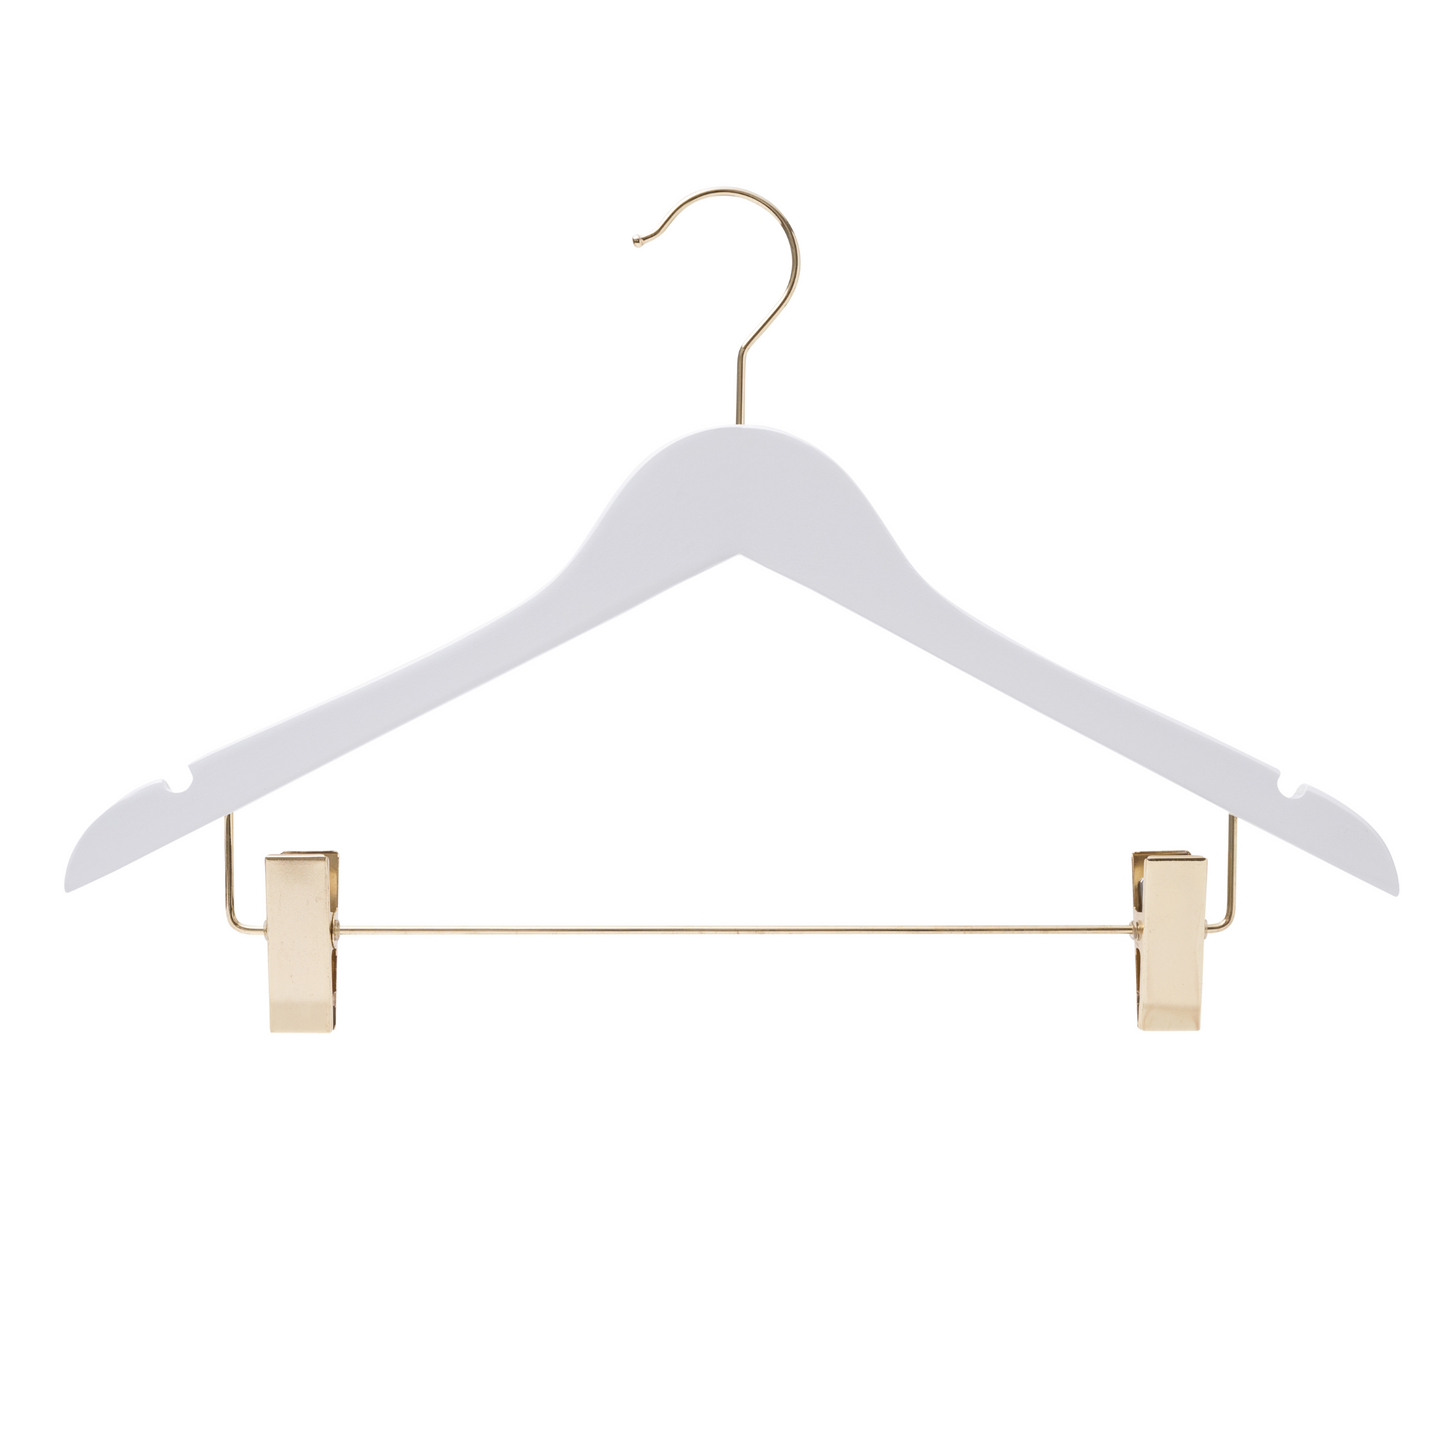 43cm Premium White Wooden Combination Coat Hanger With (Gold Hook & Clips) 12mm thick Sold 25/50/100 - Rackshop Australia